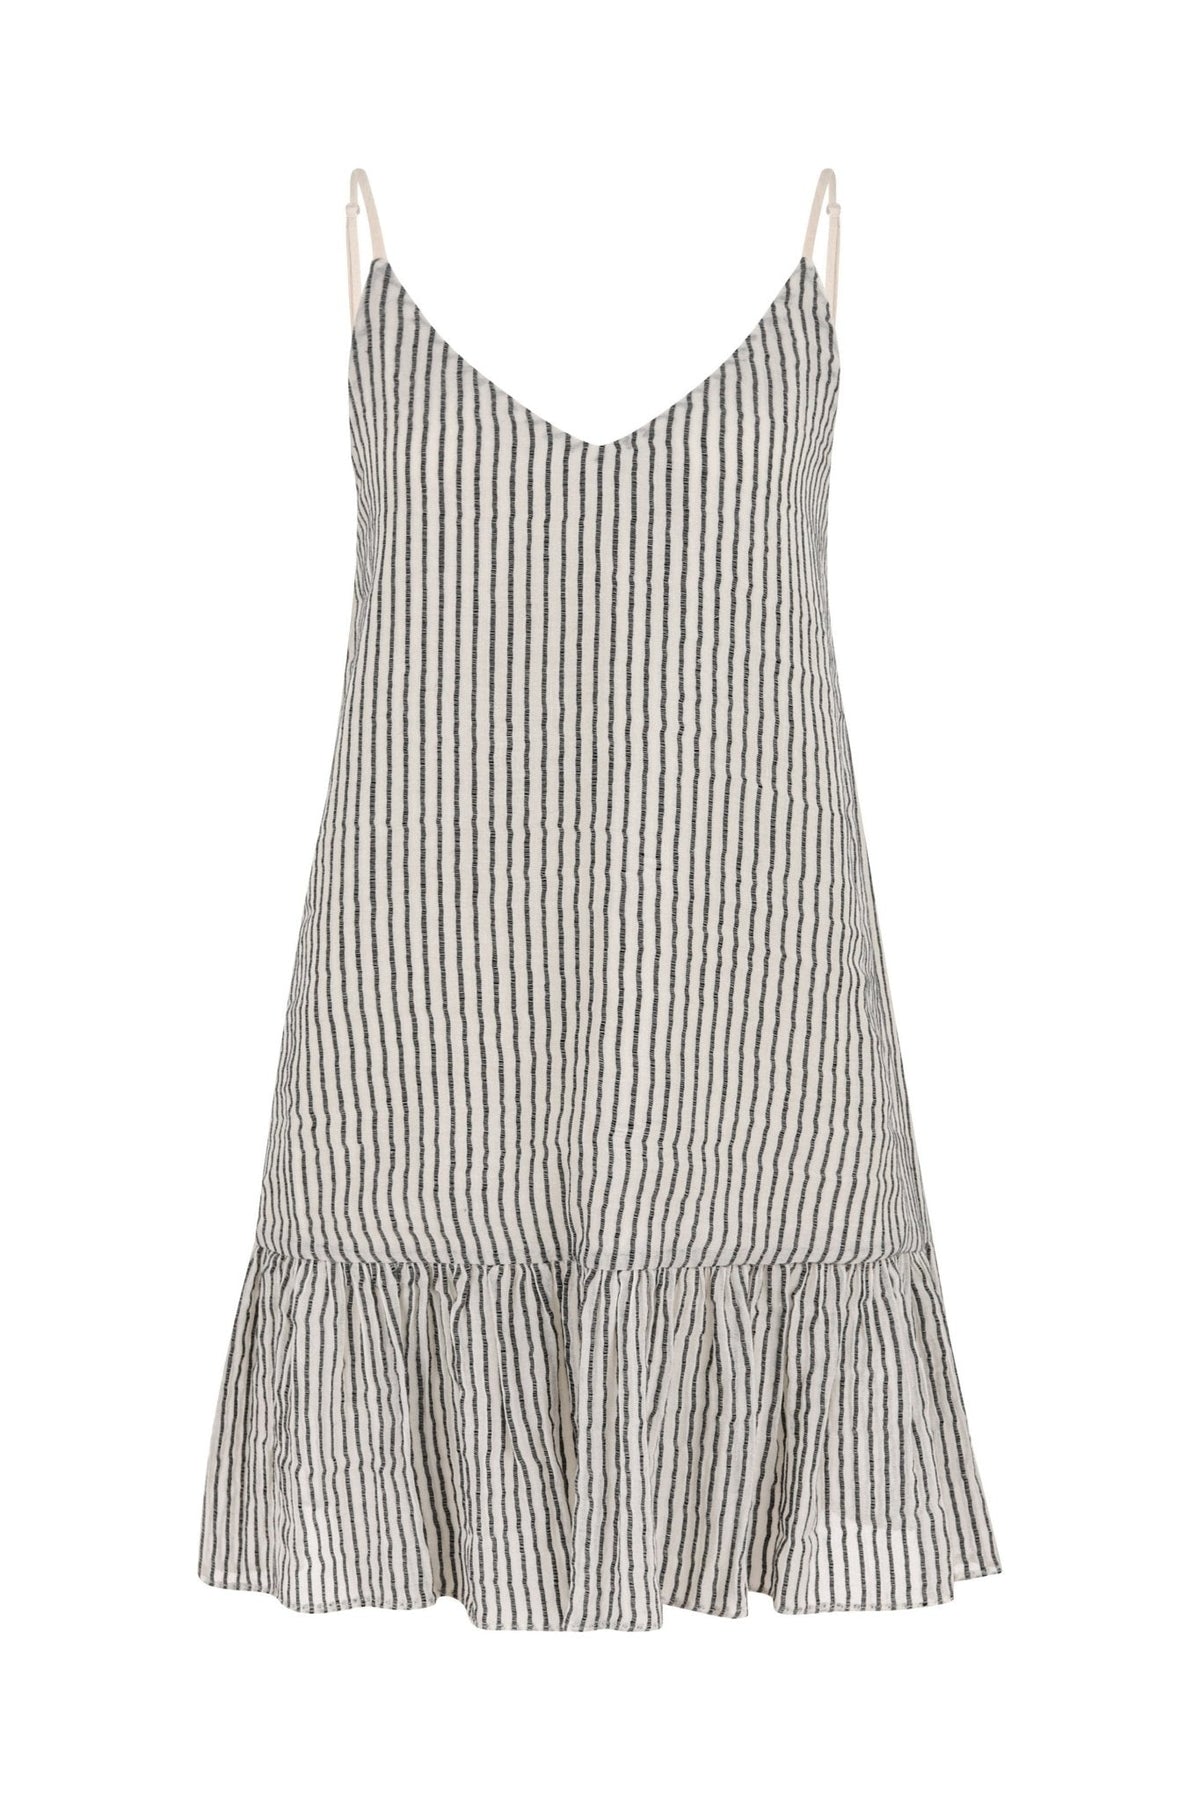 THE HAND LOOM Liv Mini Ruffle 100% Organic Cotton Womens Dress Stripes